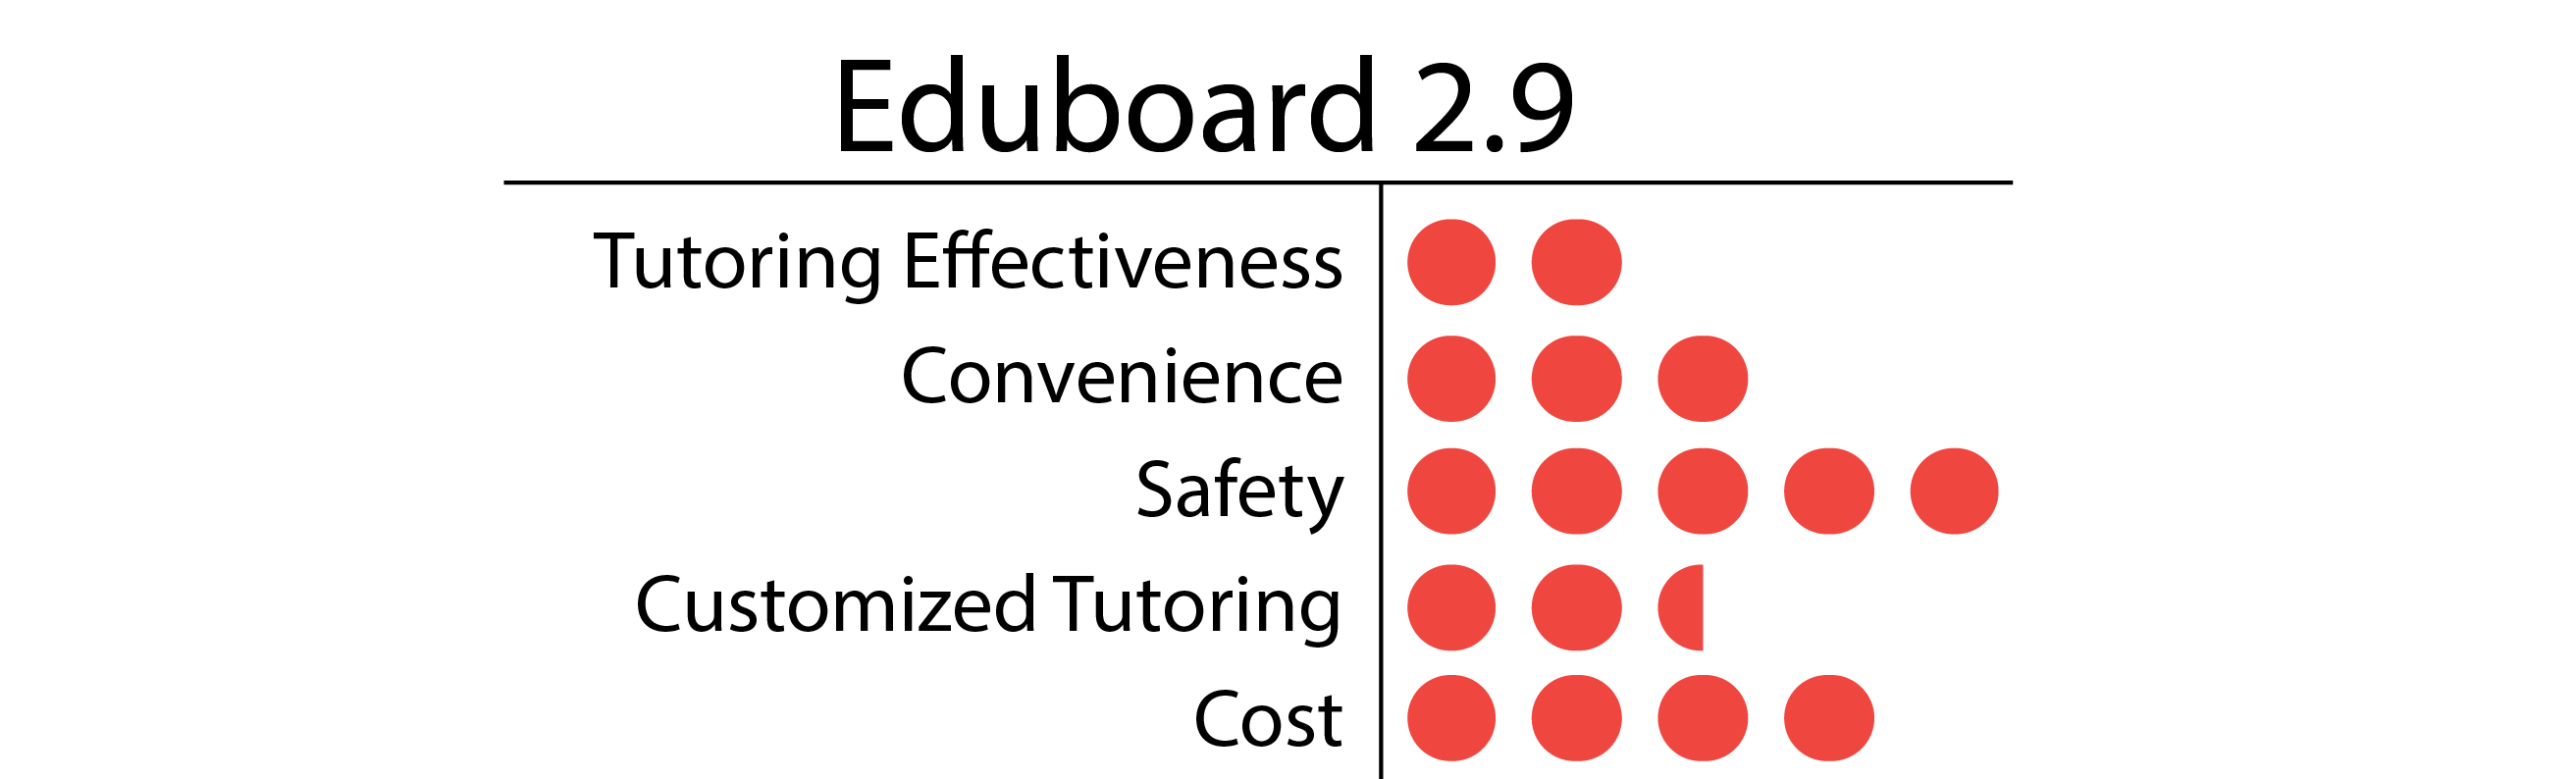 Eduboard-01